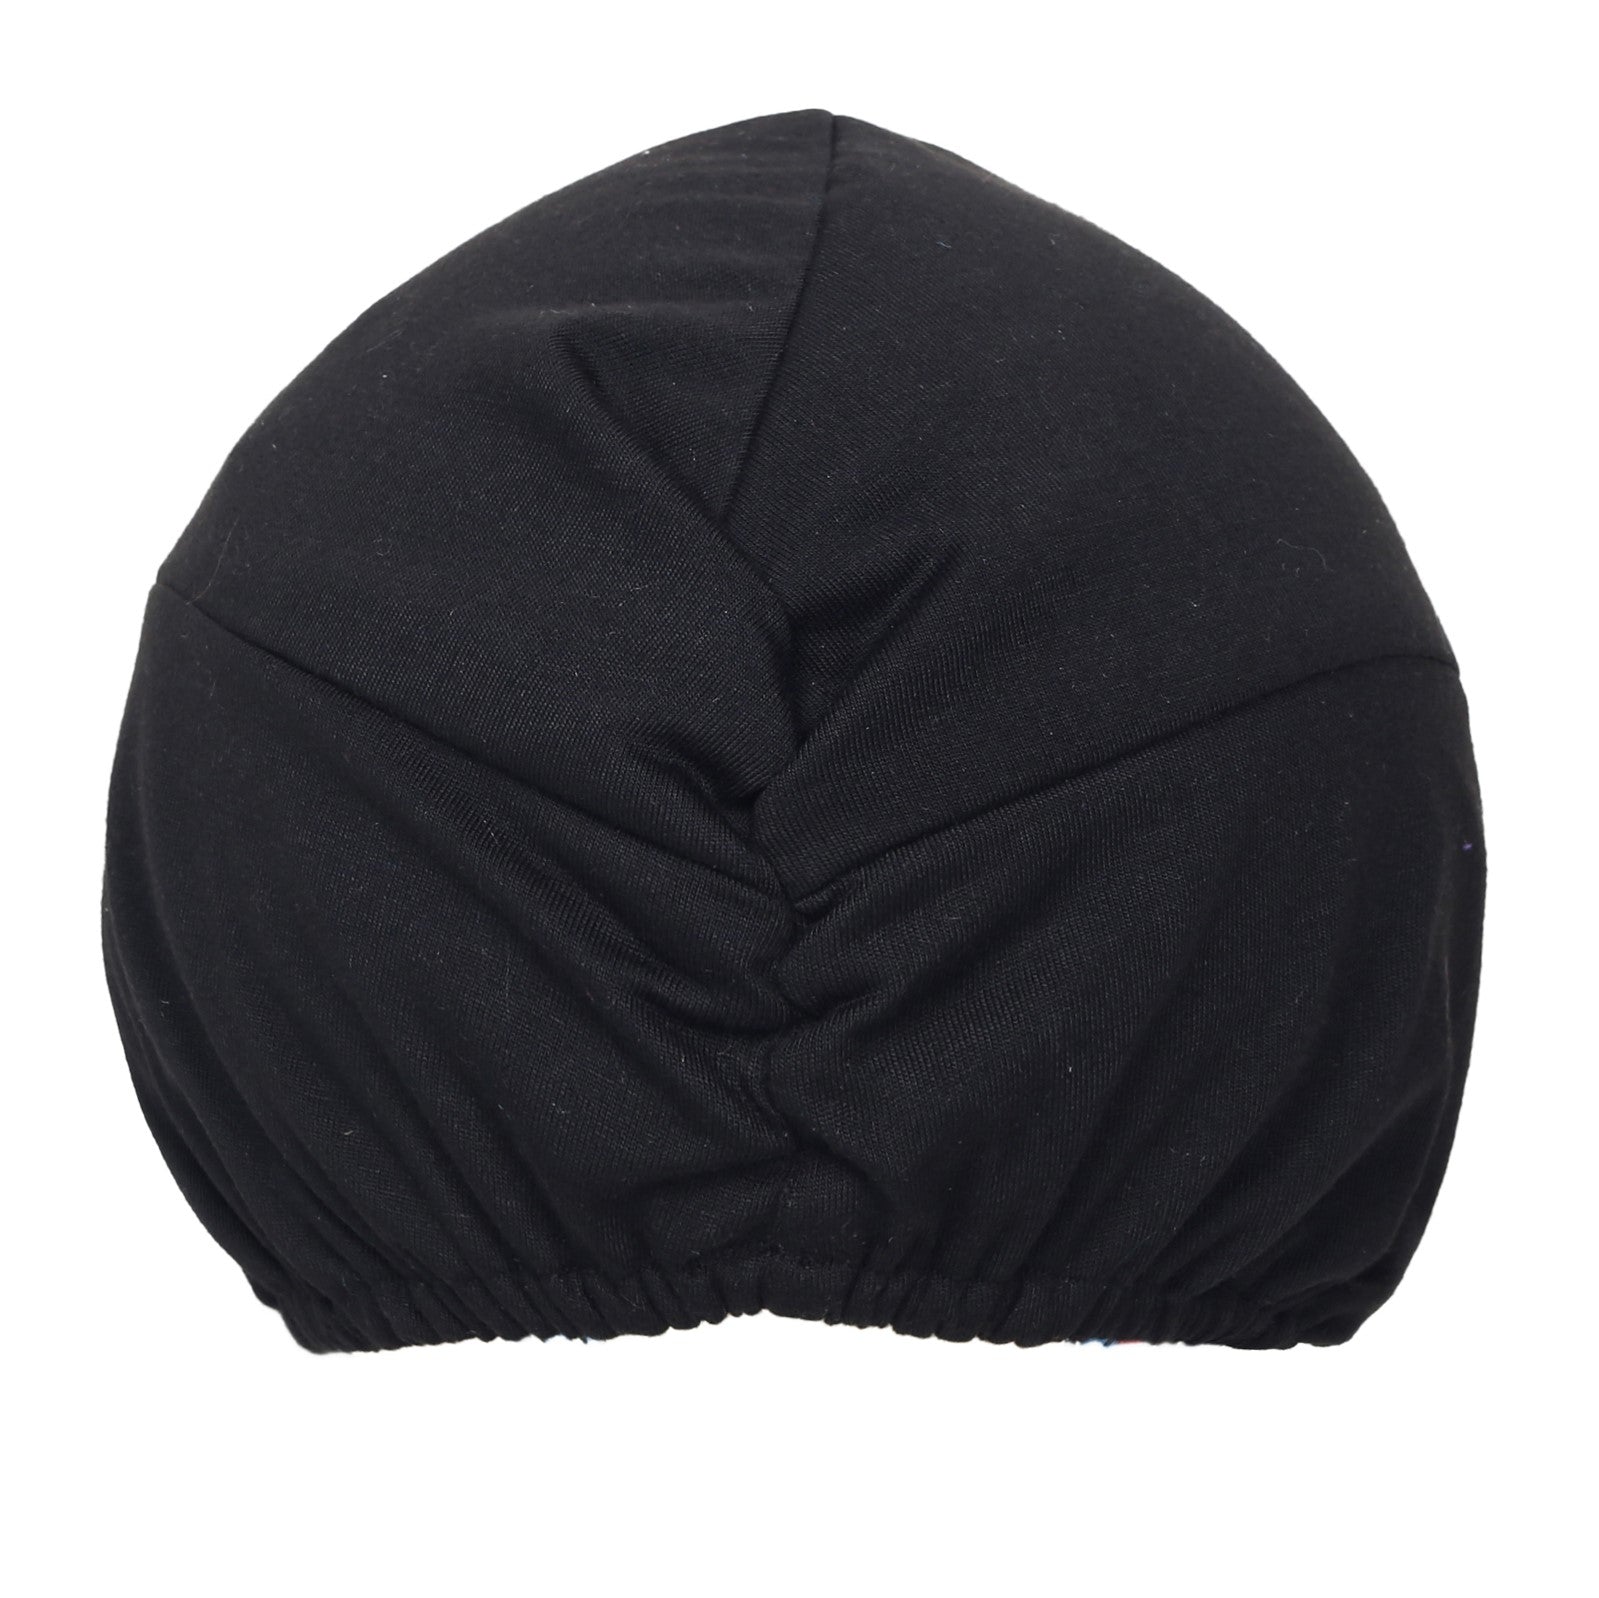 Twisted turban - Manetain Store